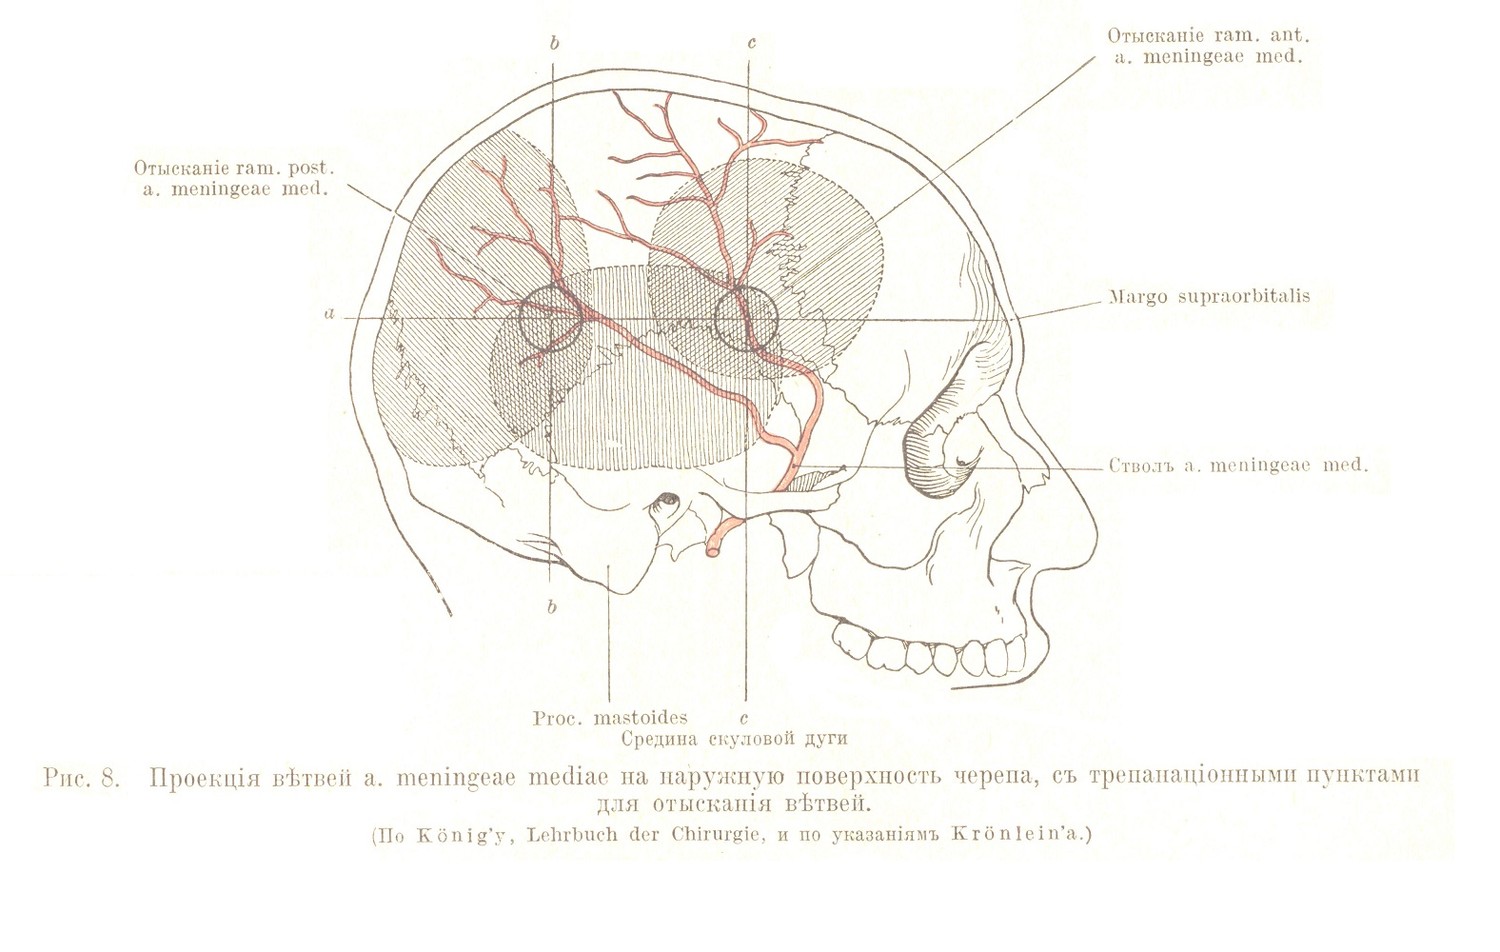 Проекція вѣтвей а. meningeae mediae на наружную поверхность черепа, съ трепанаціонными пунктами для отысканія вѣтвей.